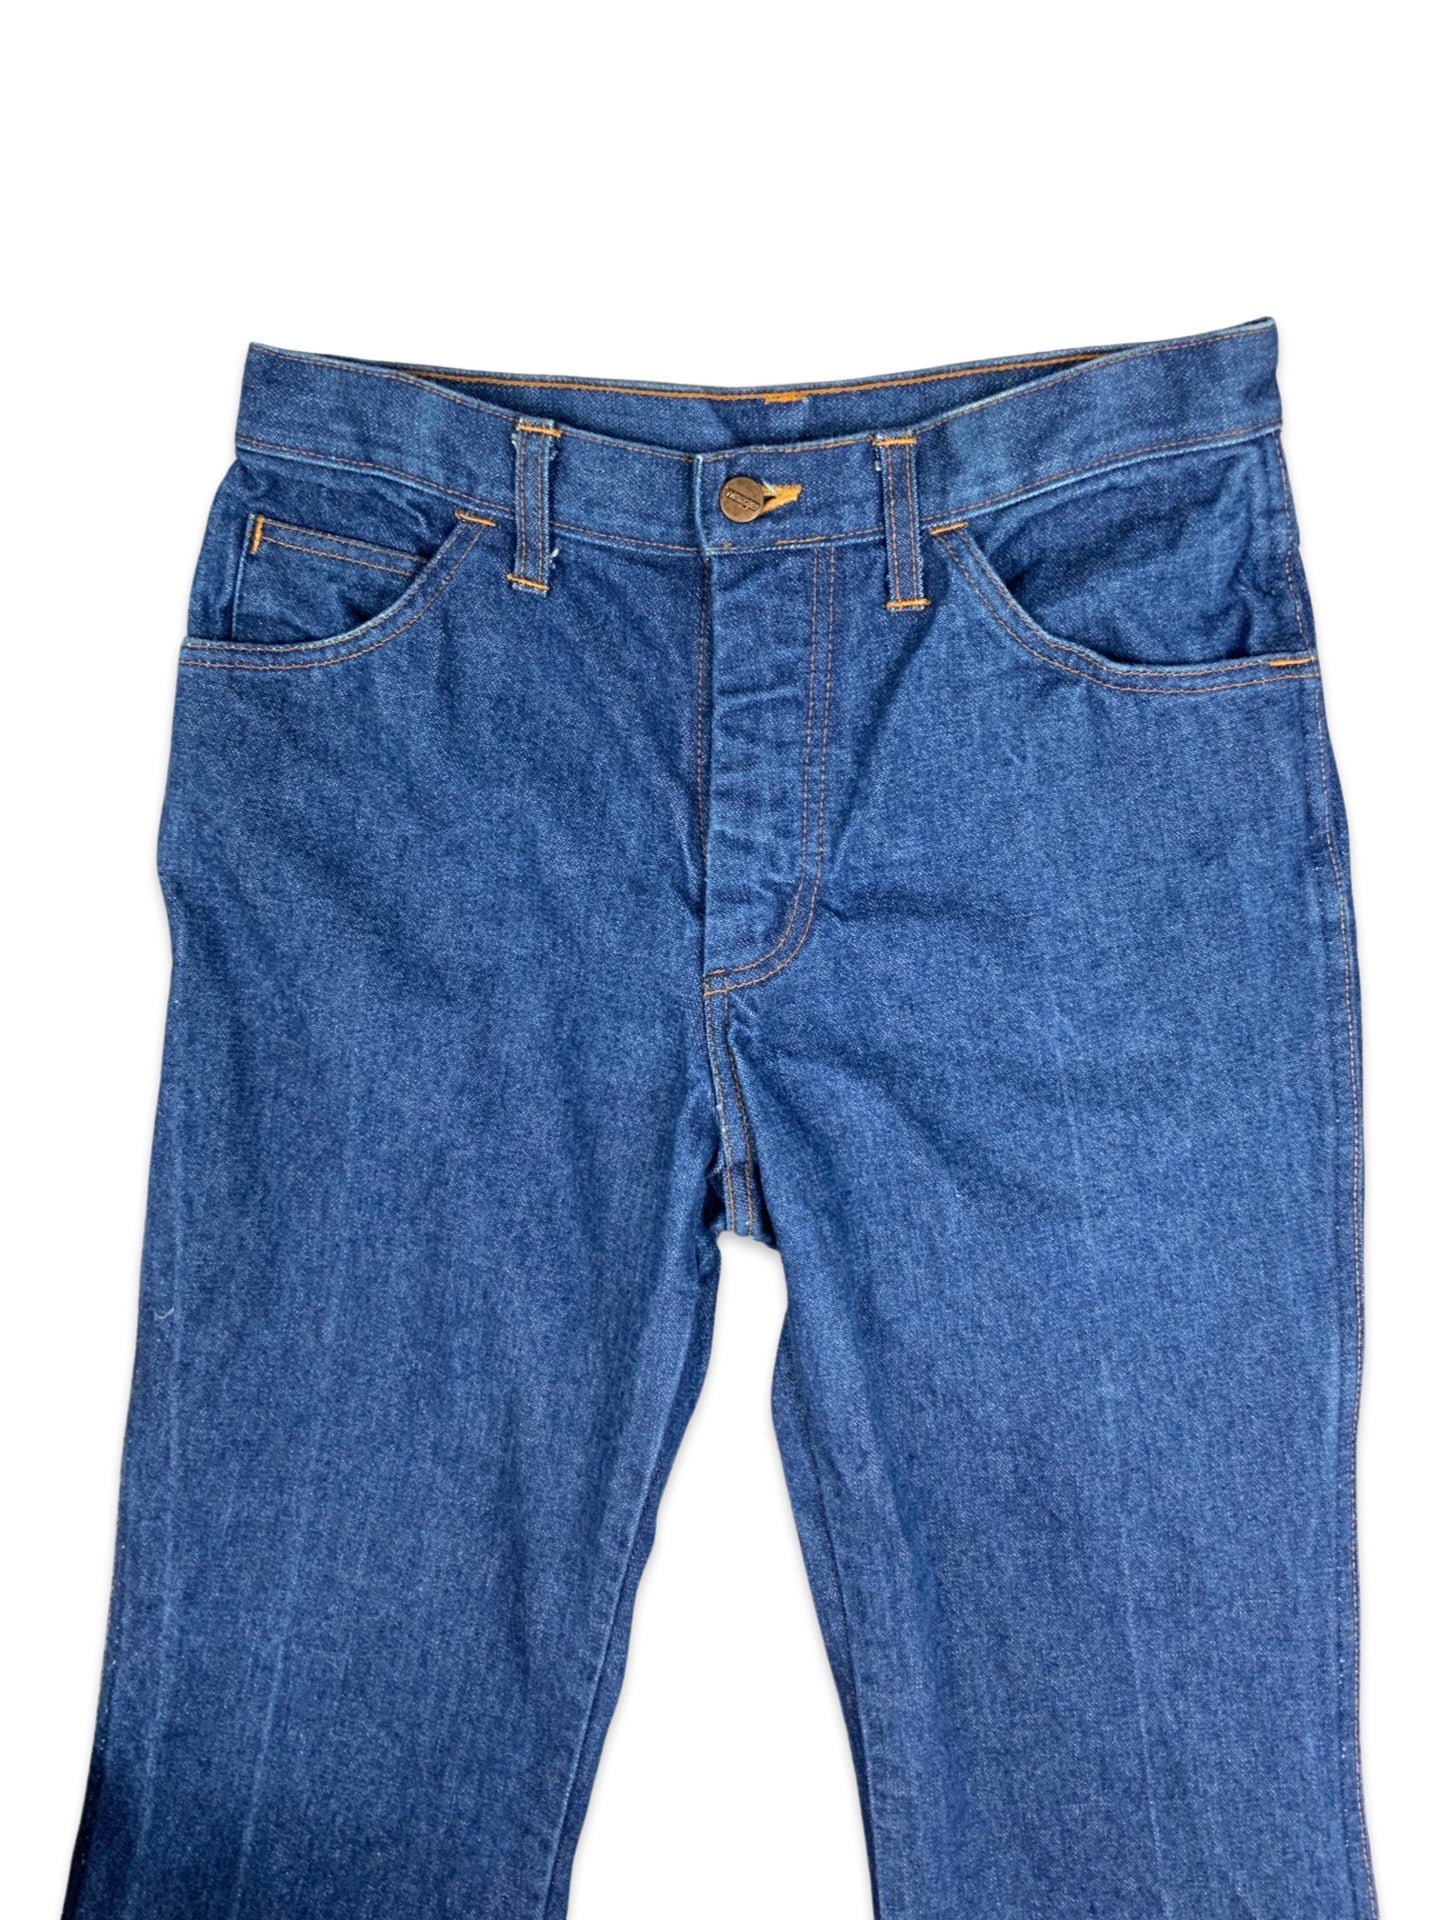 Vintage 70s Wrangler Blue High Waisted Flared Jeans 12